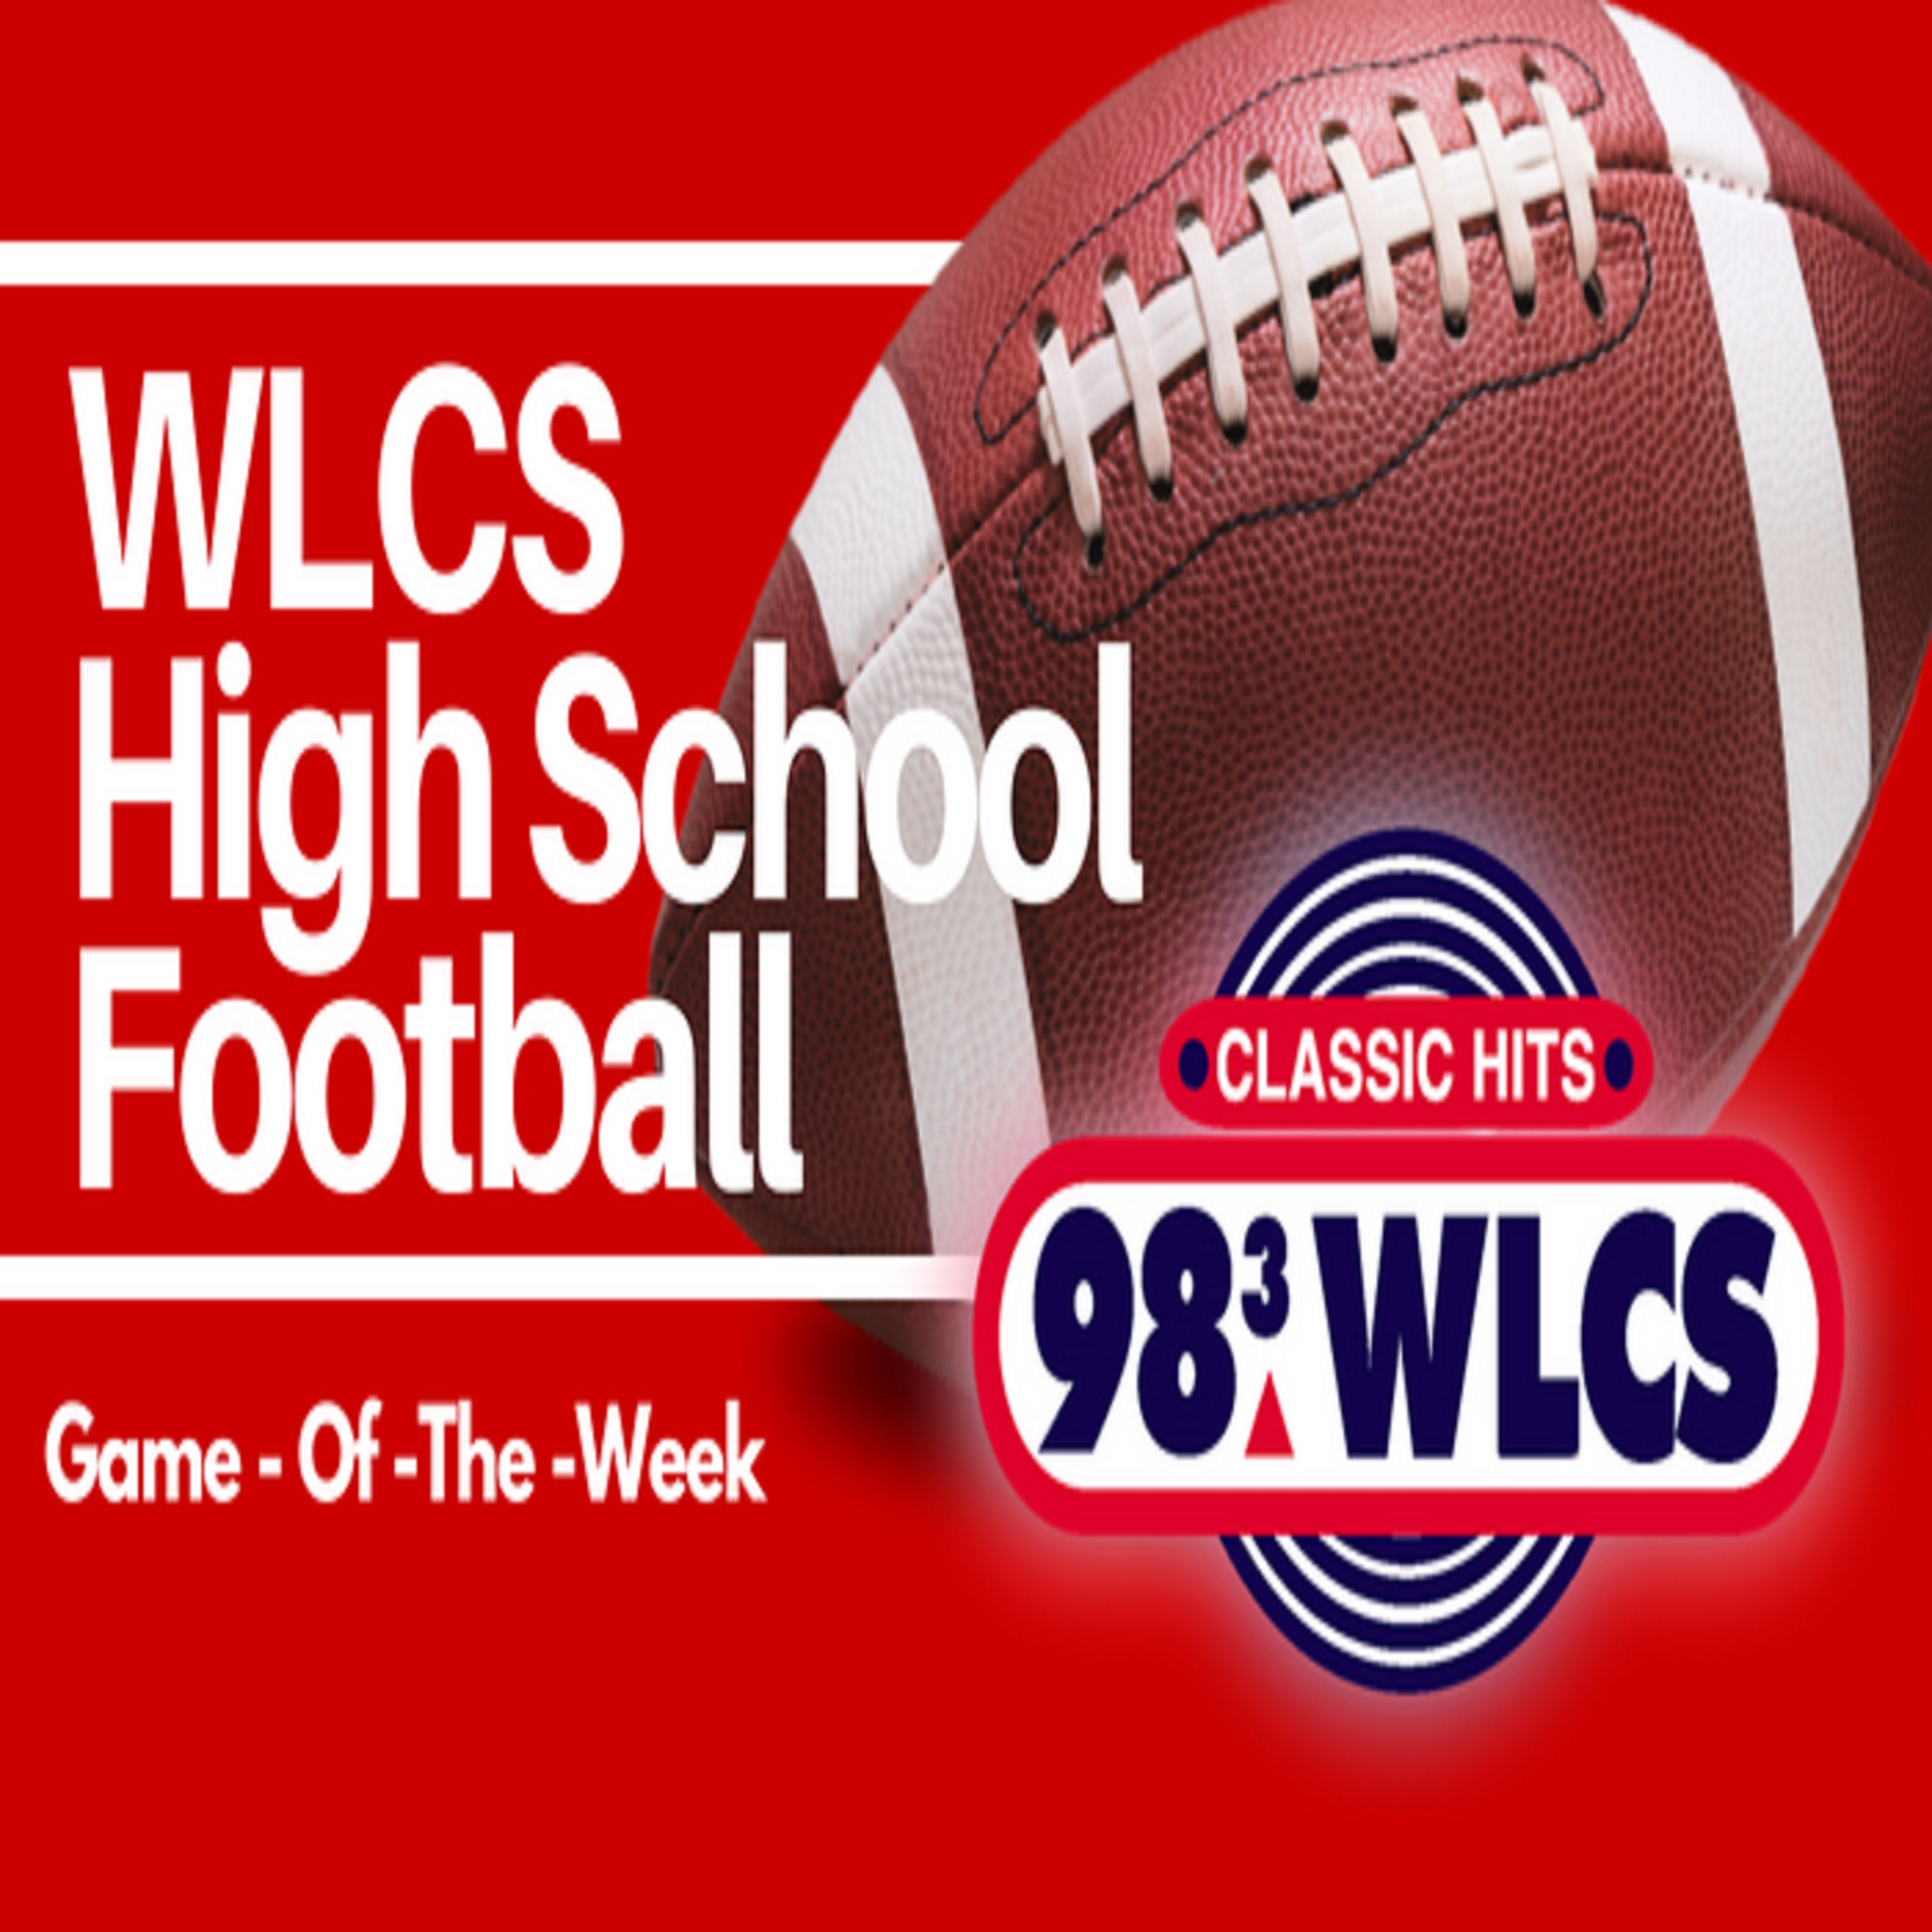 WLCS High School Football Game of the Week